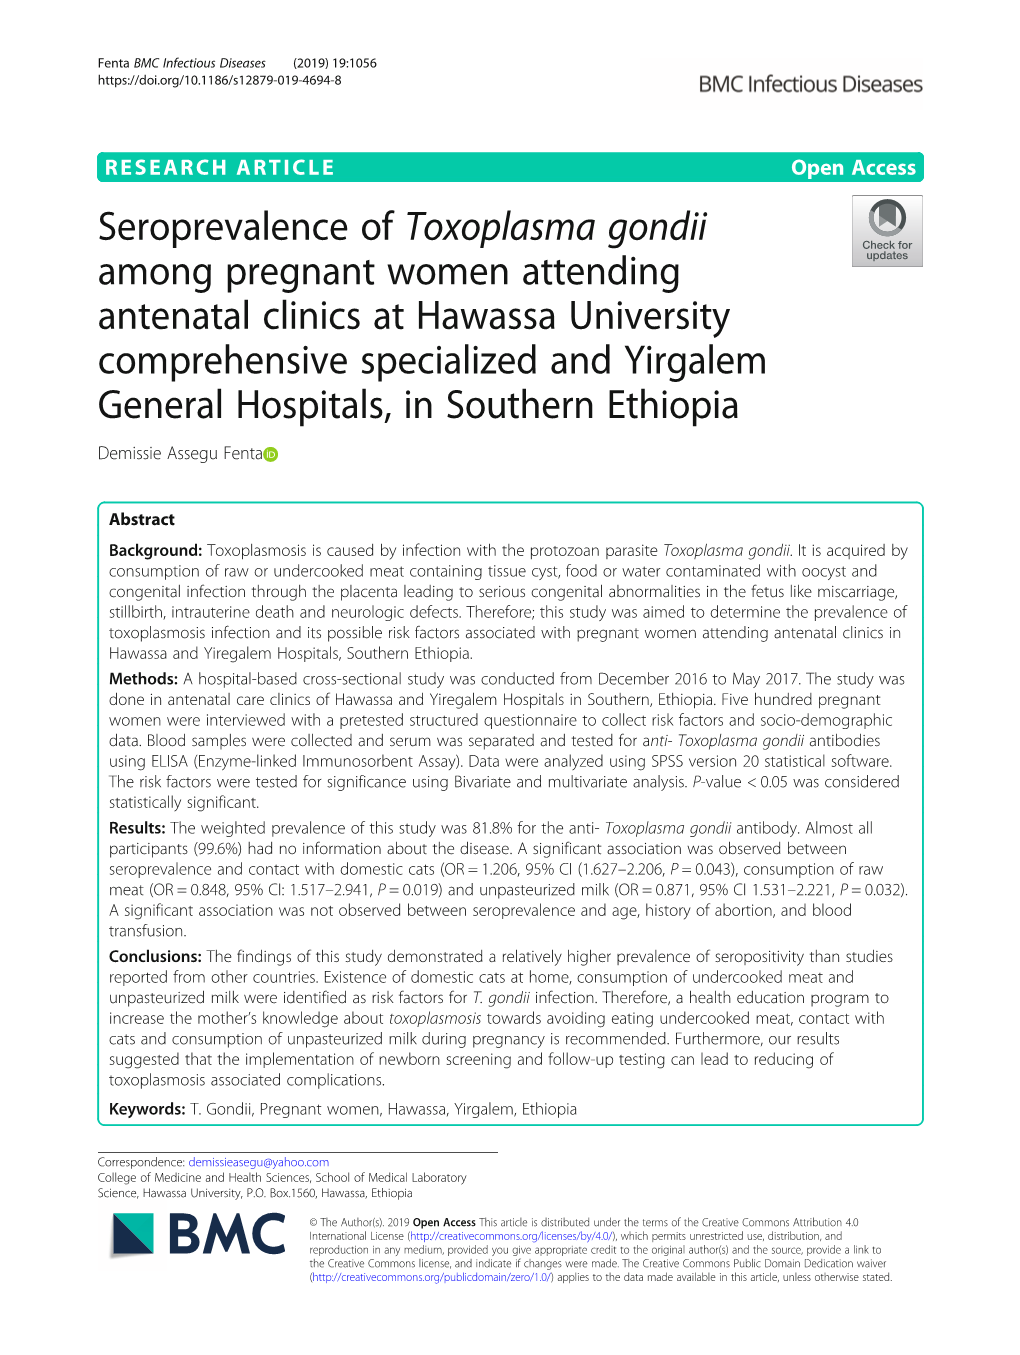 Seroprevalence of Toxoplasma Gondii Among Pregnant Women Attending